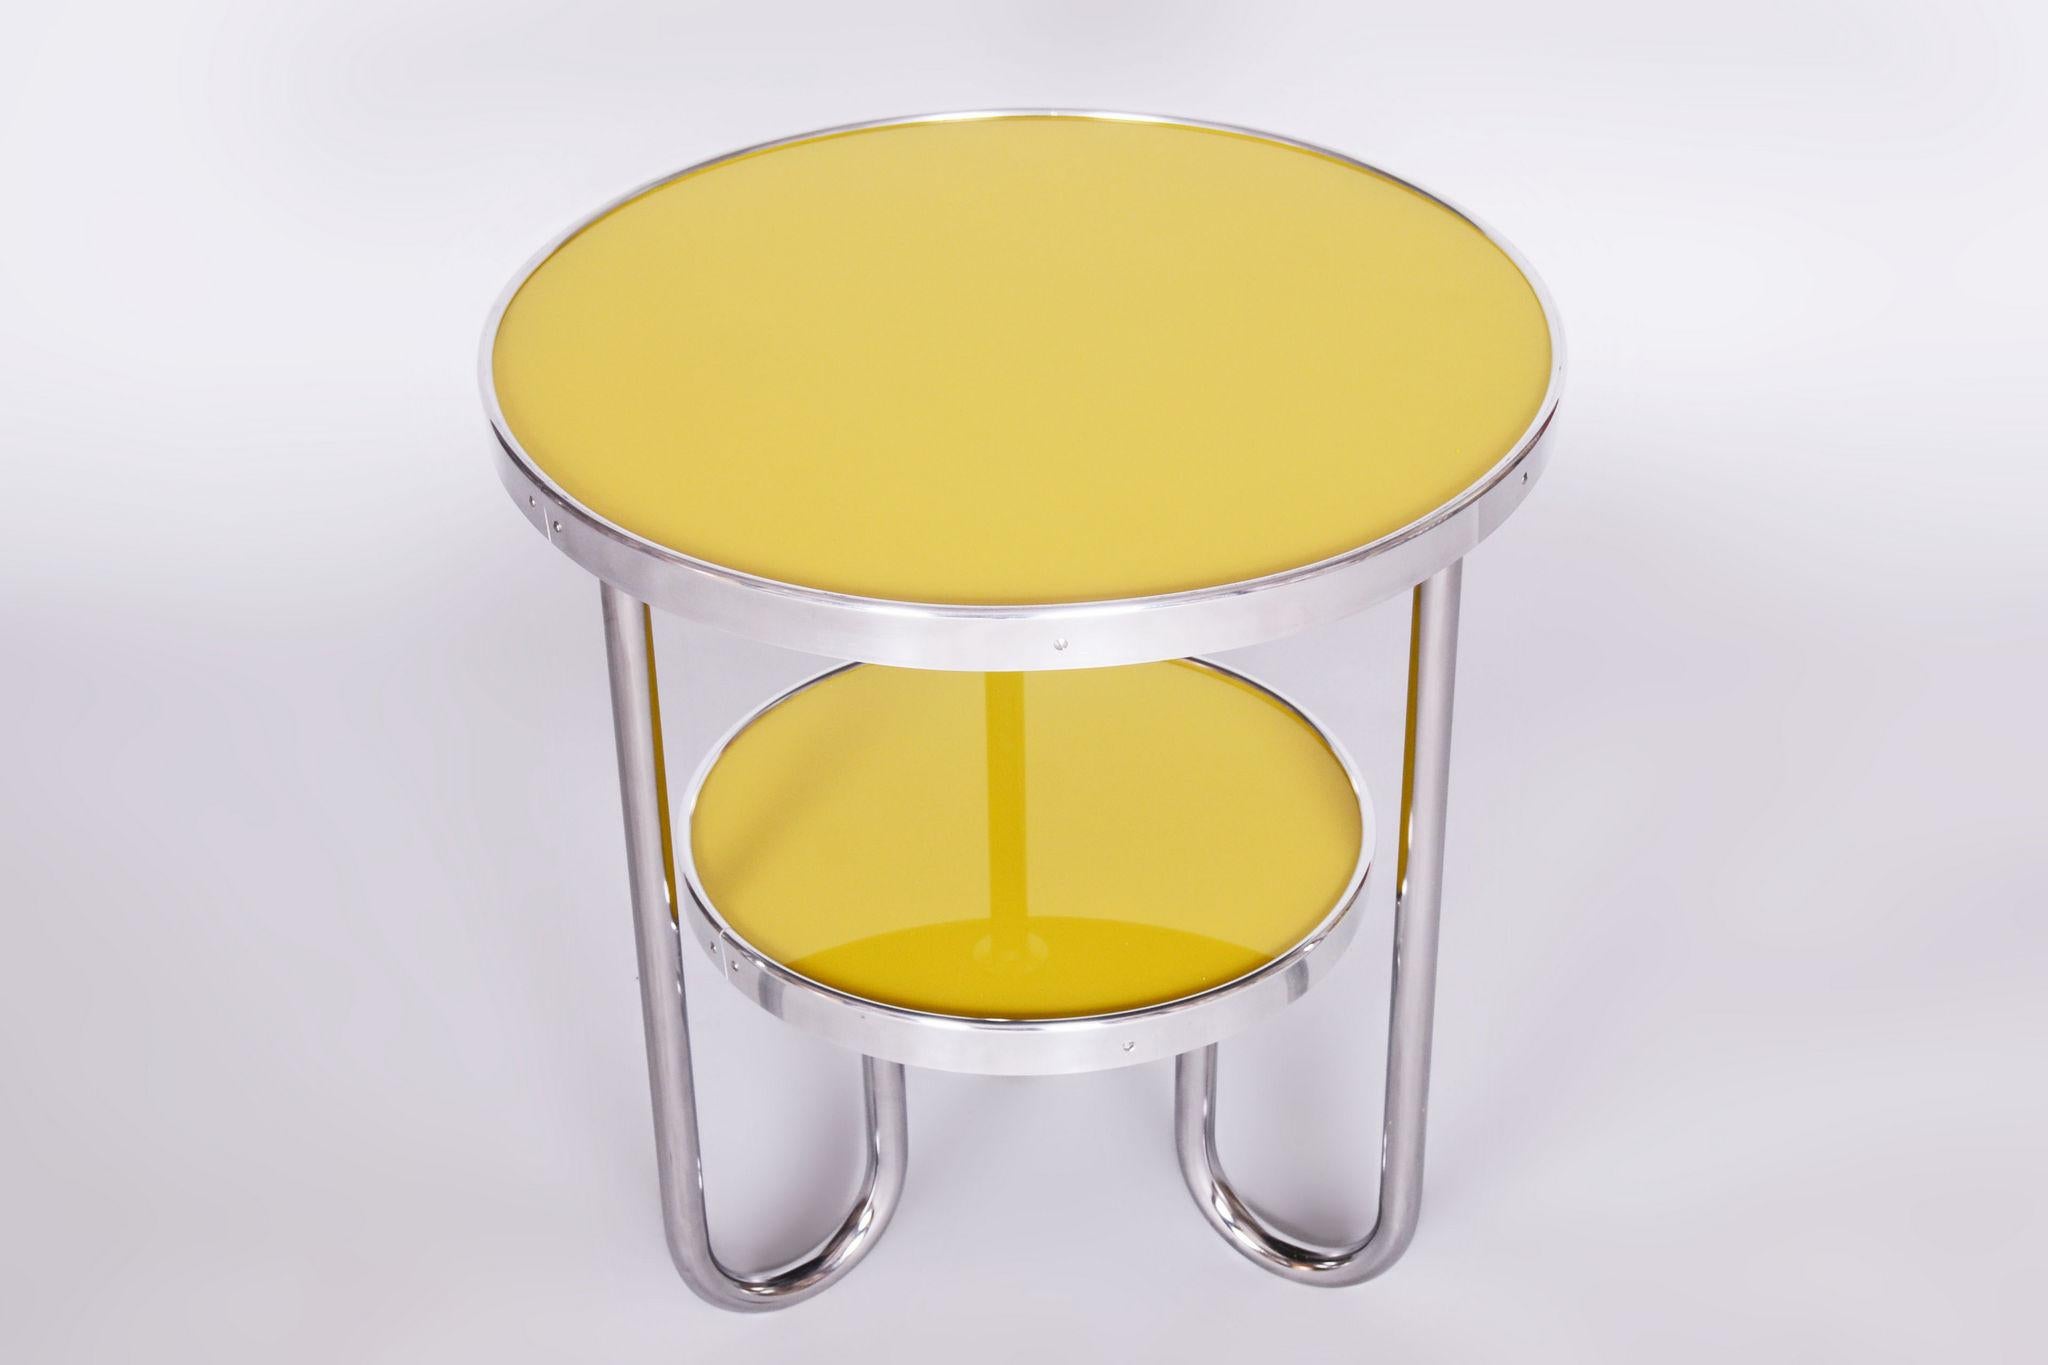 Mid-20th Century Restored Bauhaus Small Yellow Table, Kovona, Chrome, Czechia, 1930s For Sale